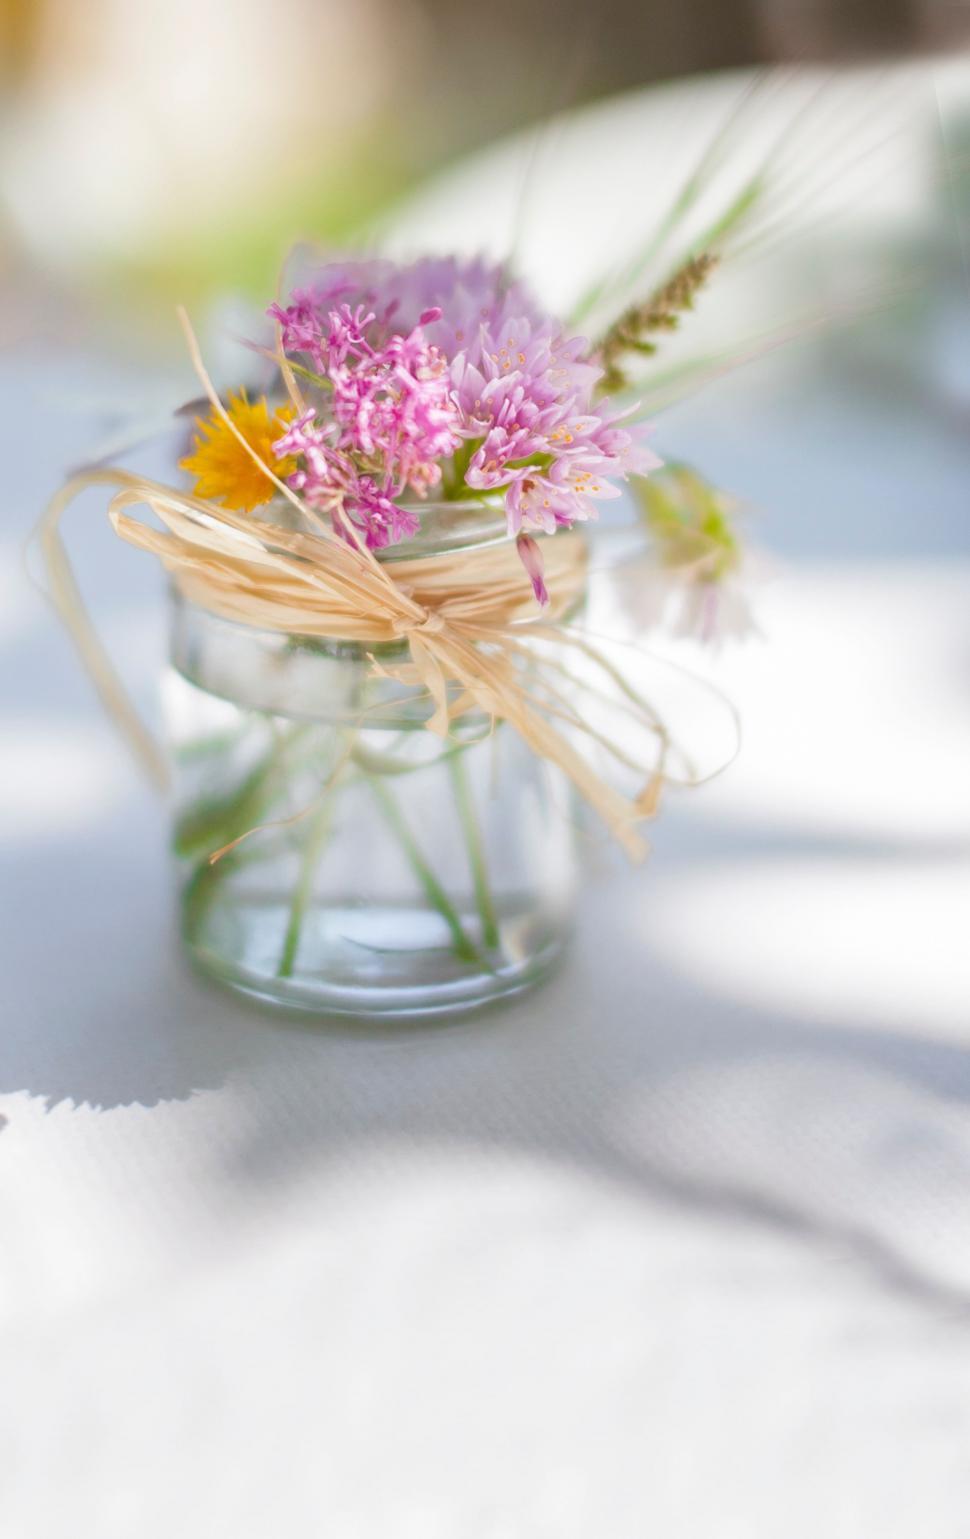 Free Image of vase jar flower glass container vessel plant decoration floral petal 